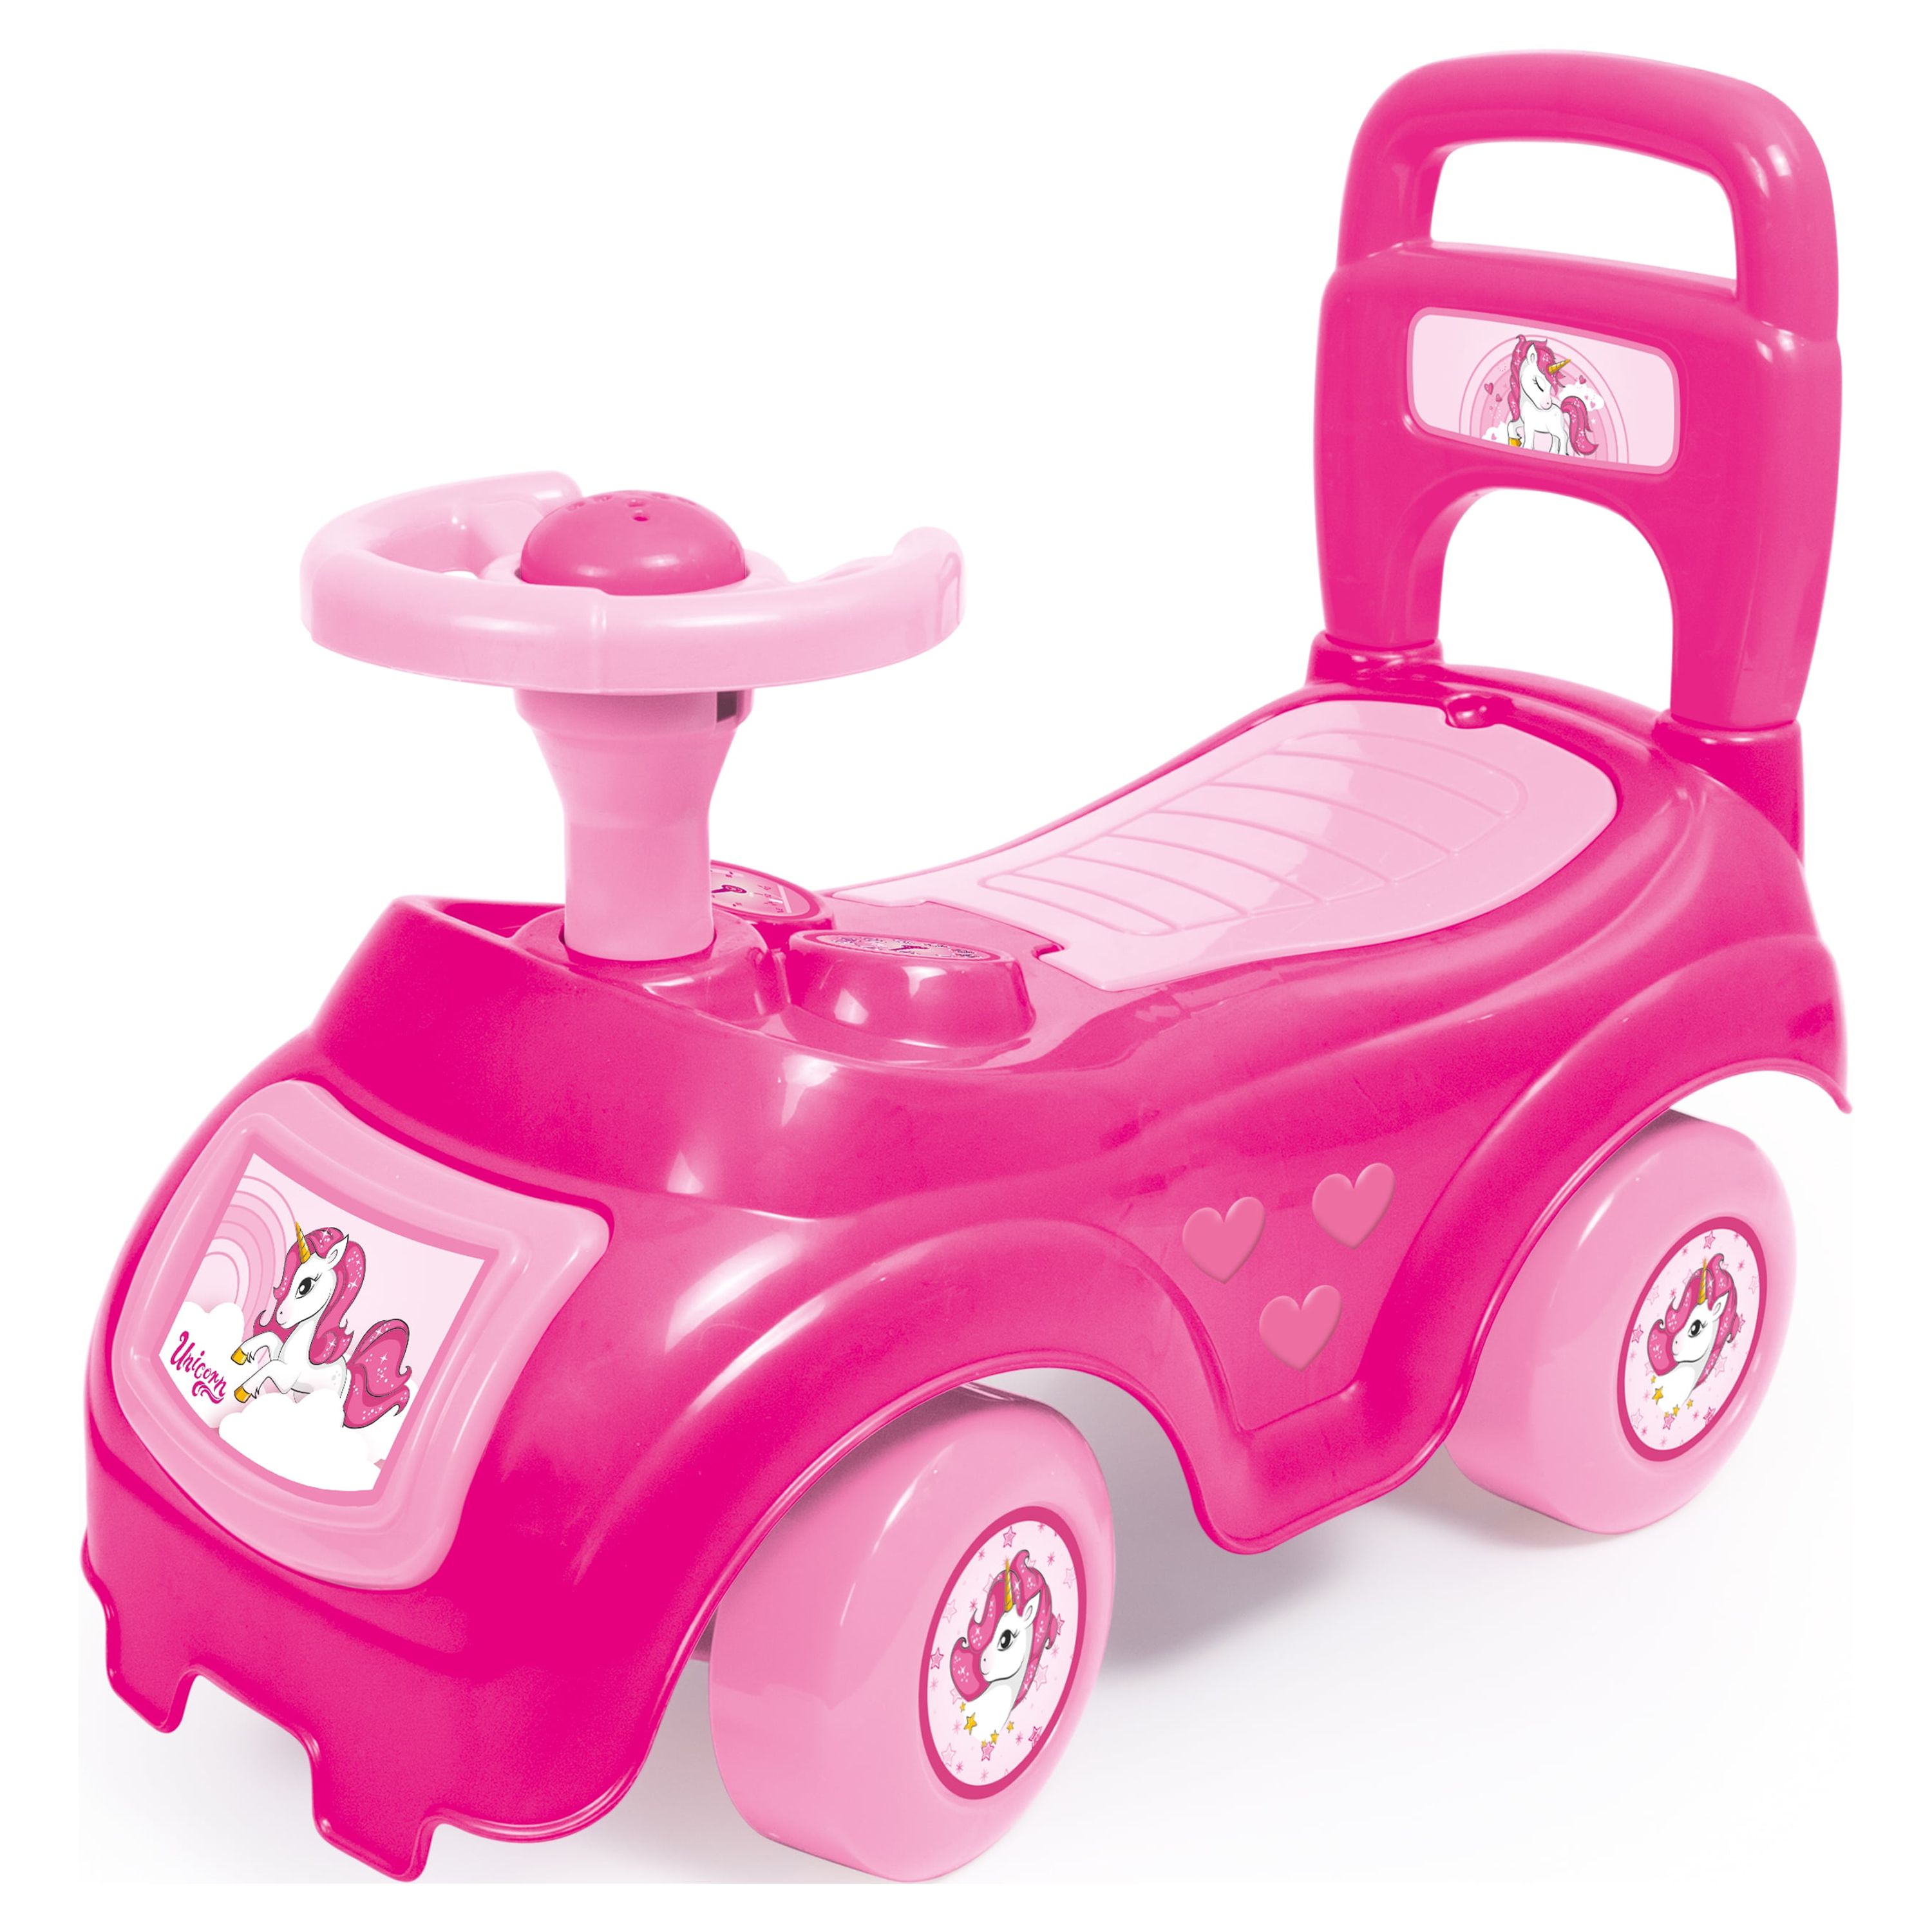 Dolu Toys - Push & Pedal Ride-on's Pink Unicorn Sit and Ride unisex - image 1 of 4